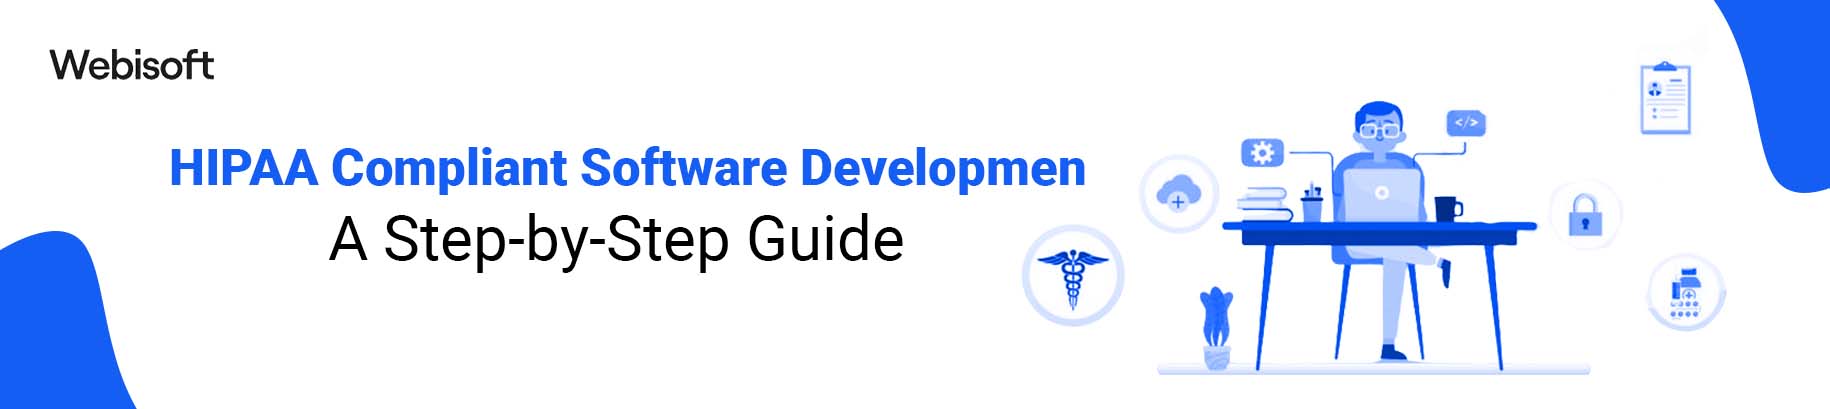 HIPAA Compliant Software Development